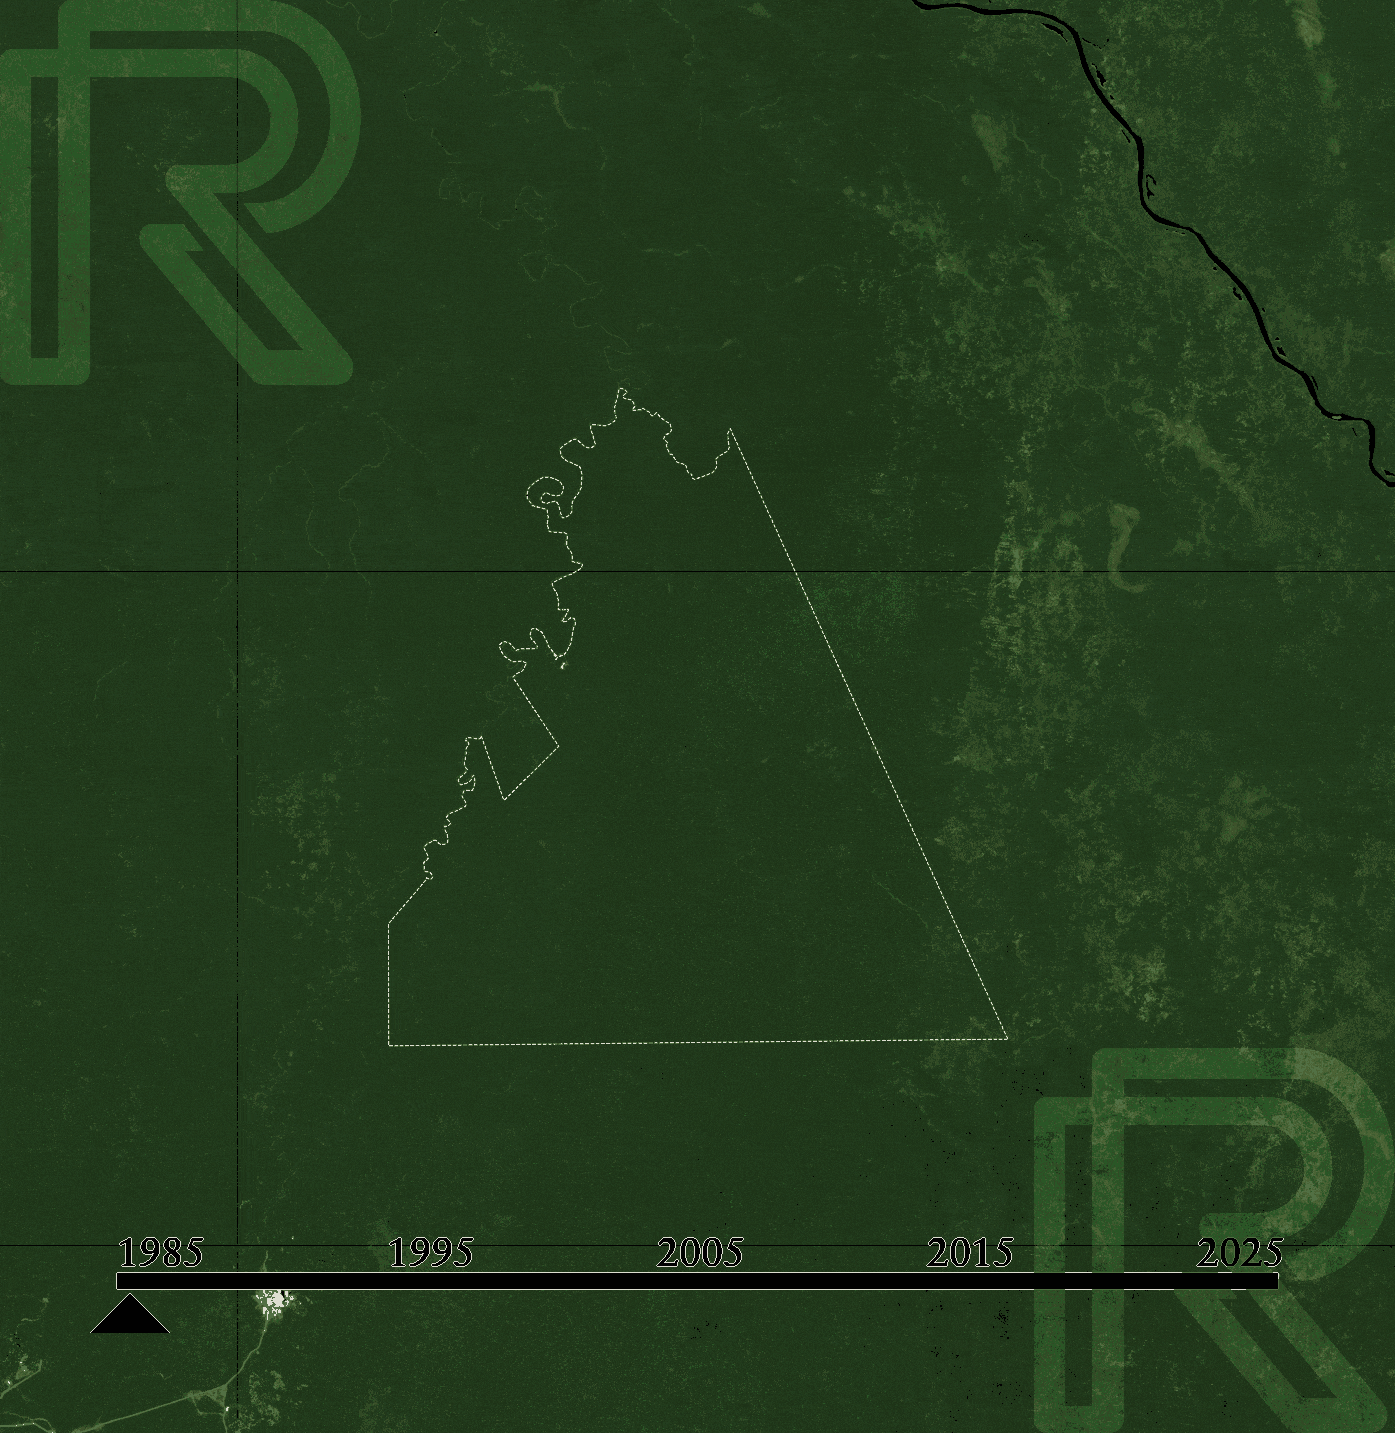 Satellite image of Manoa REDD+ over time